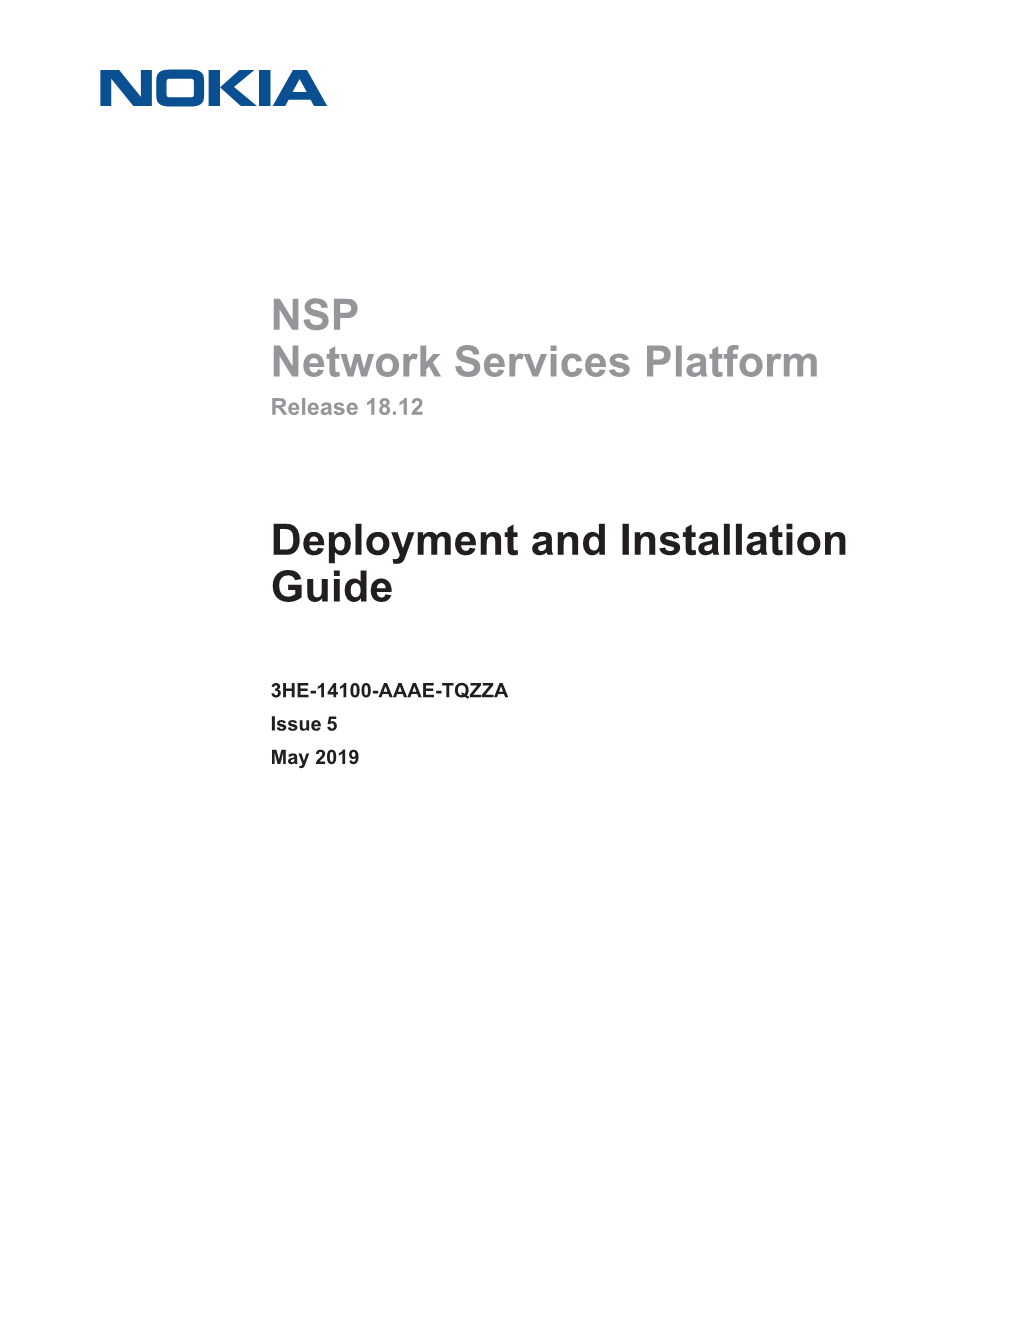 NSP Network Services Platform Release 18.12 Deployment And